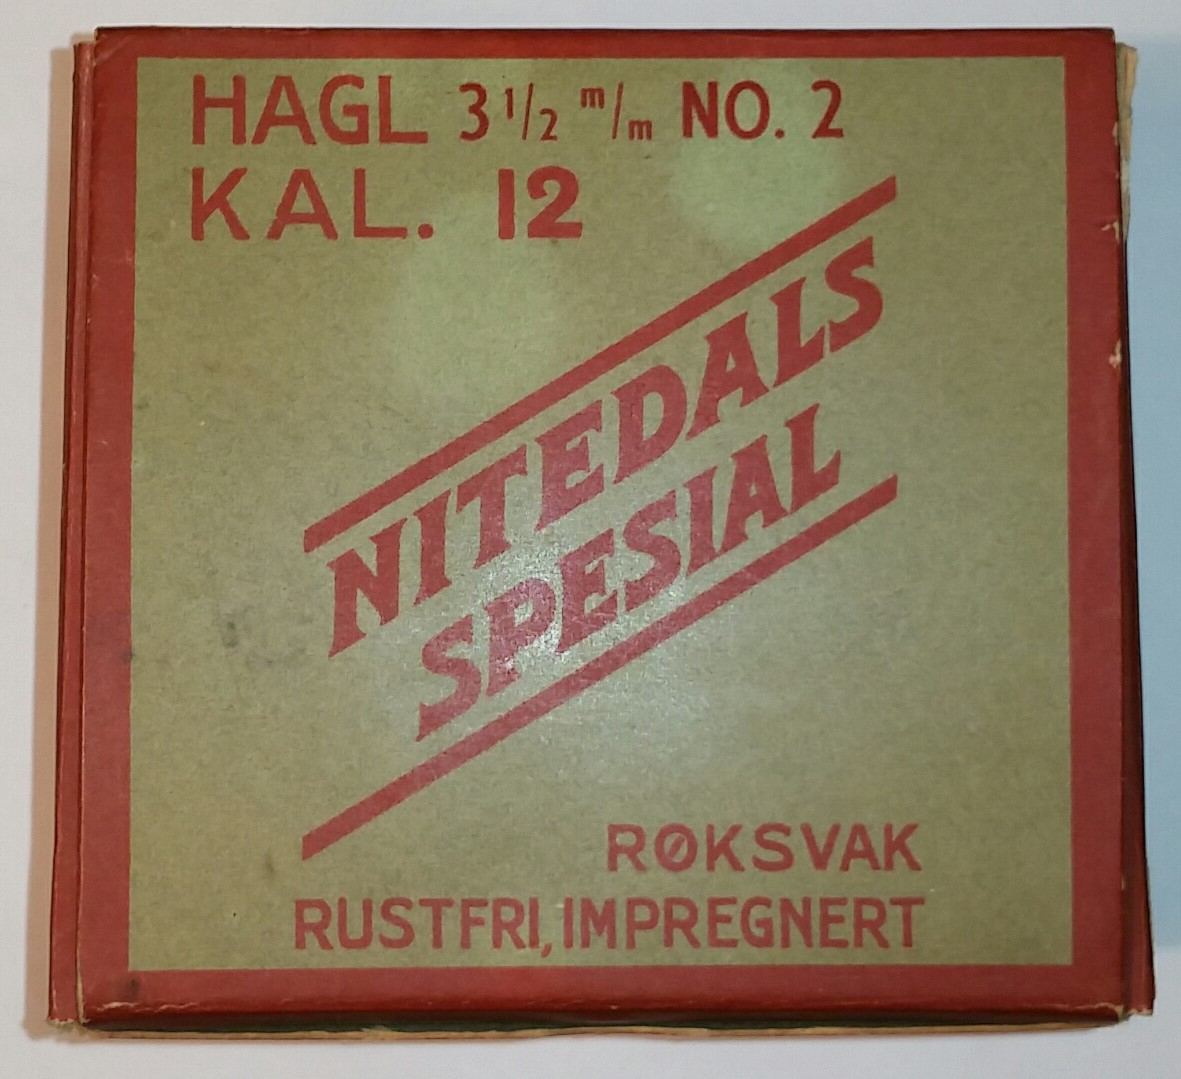 ./ammo/hagle/esker/Eske-Hagle-Nitedals-Spesial-12-65-Nr2-25skudd-variant-1.jpg